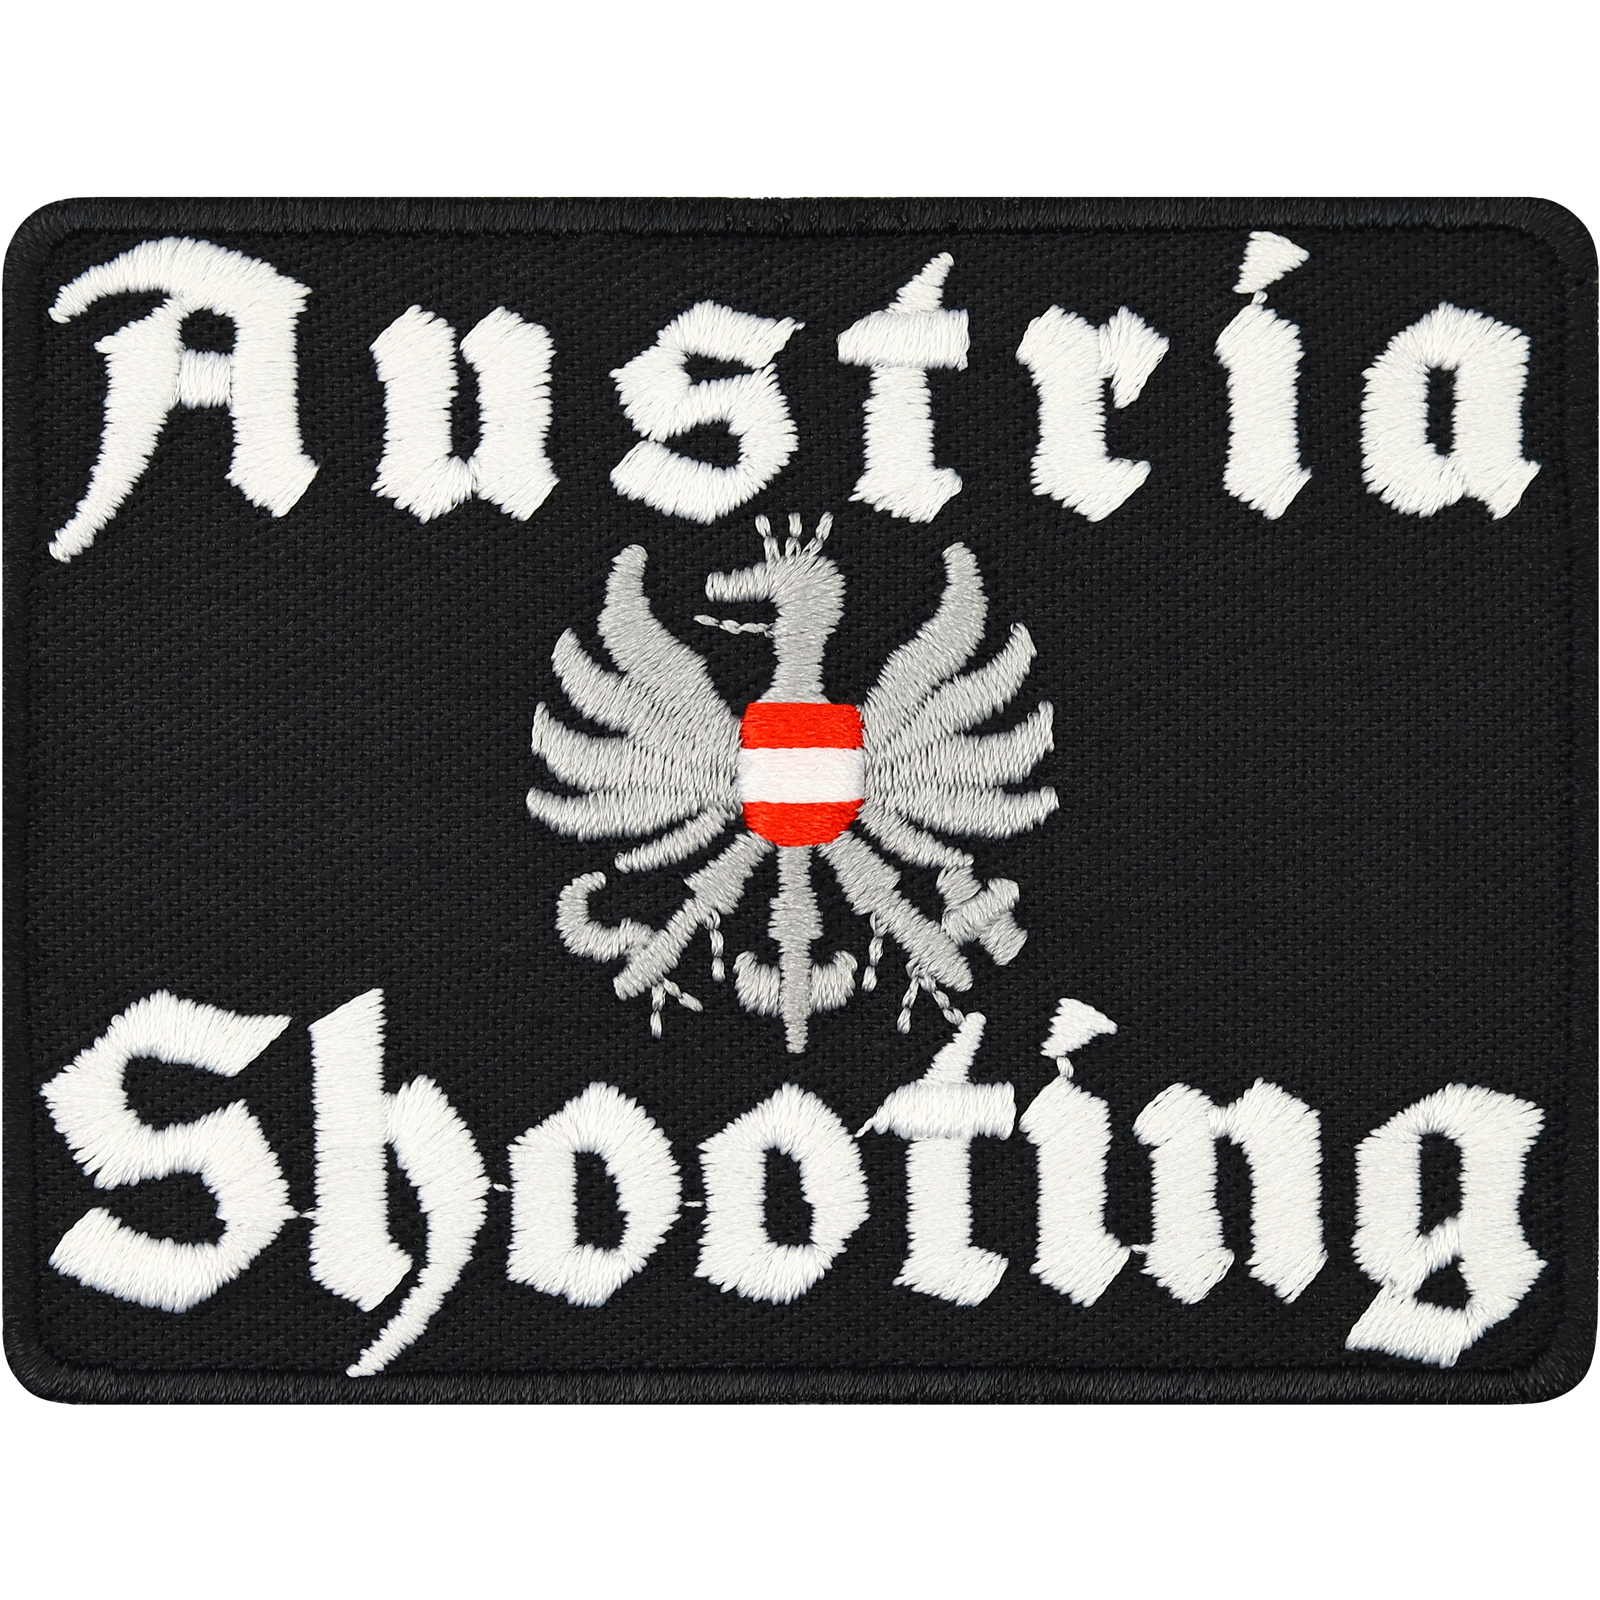 Austria shooting - Patch